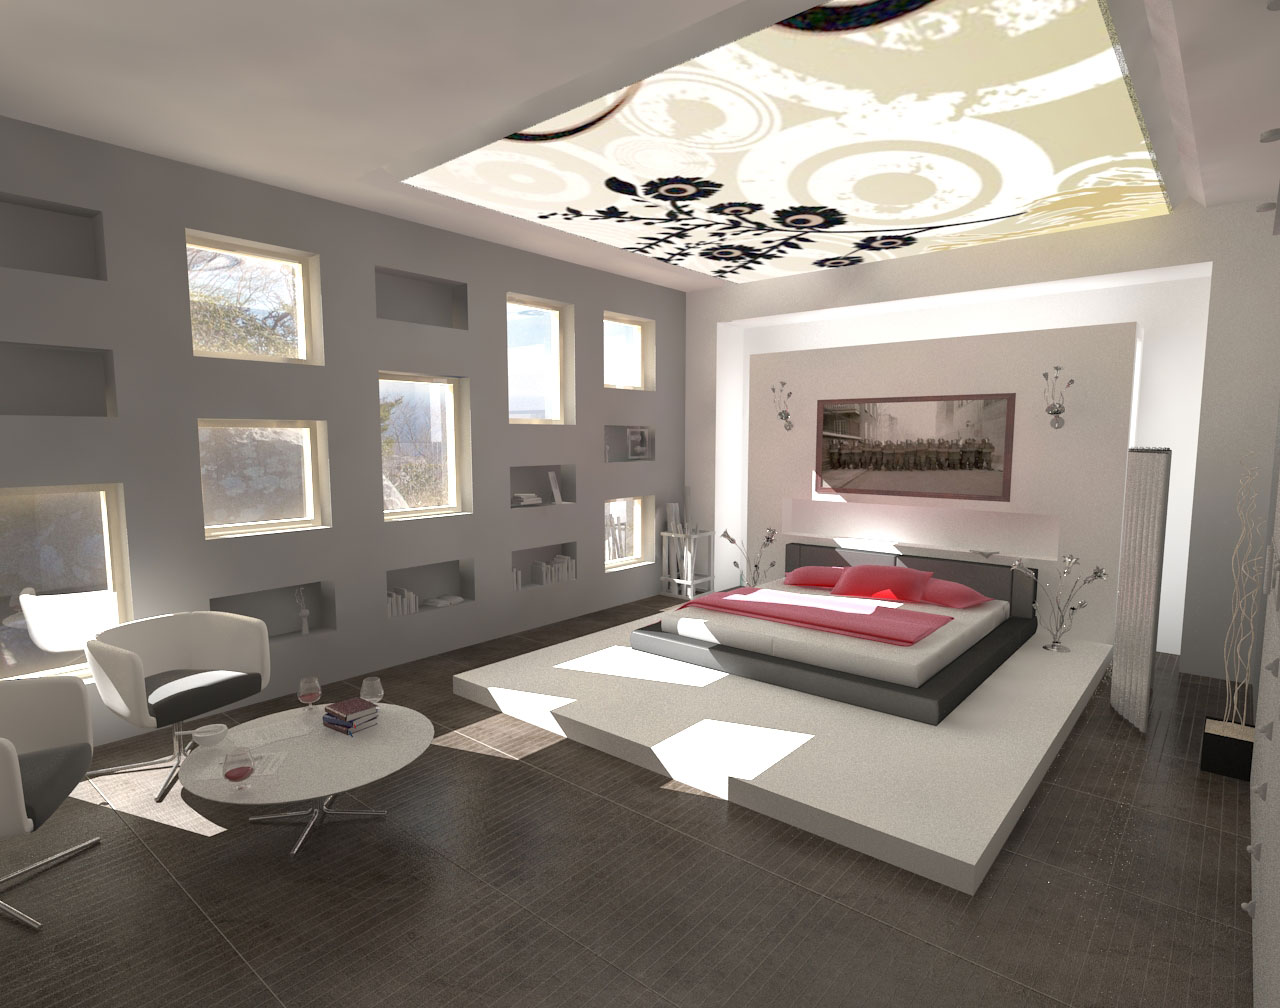 Bedroom Interior Design Ideas